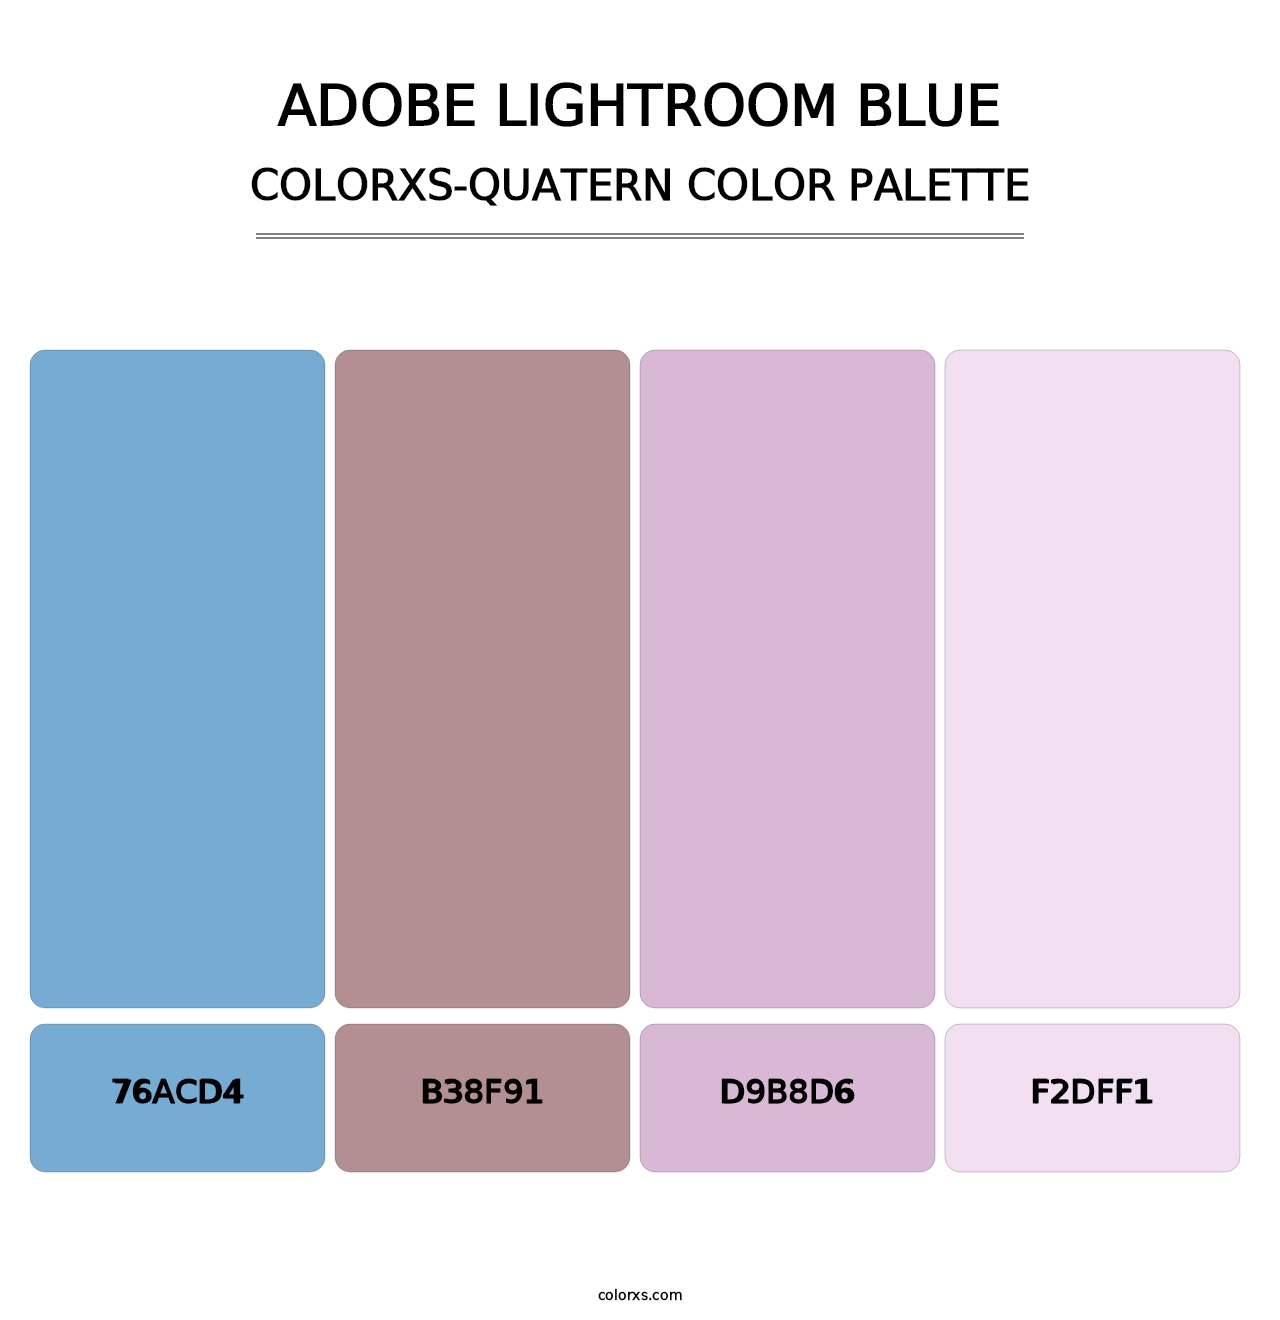 Adobe Lightroom Blue - Colorxs Quatern Palette